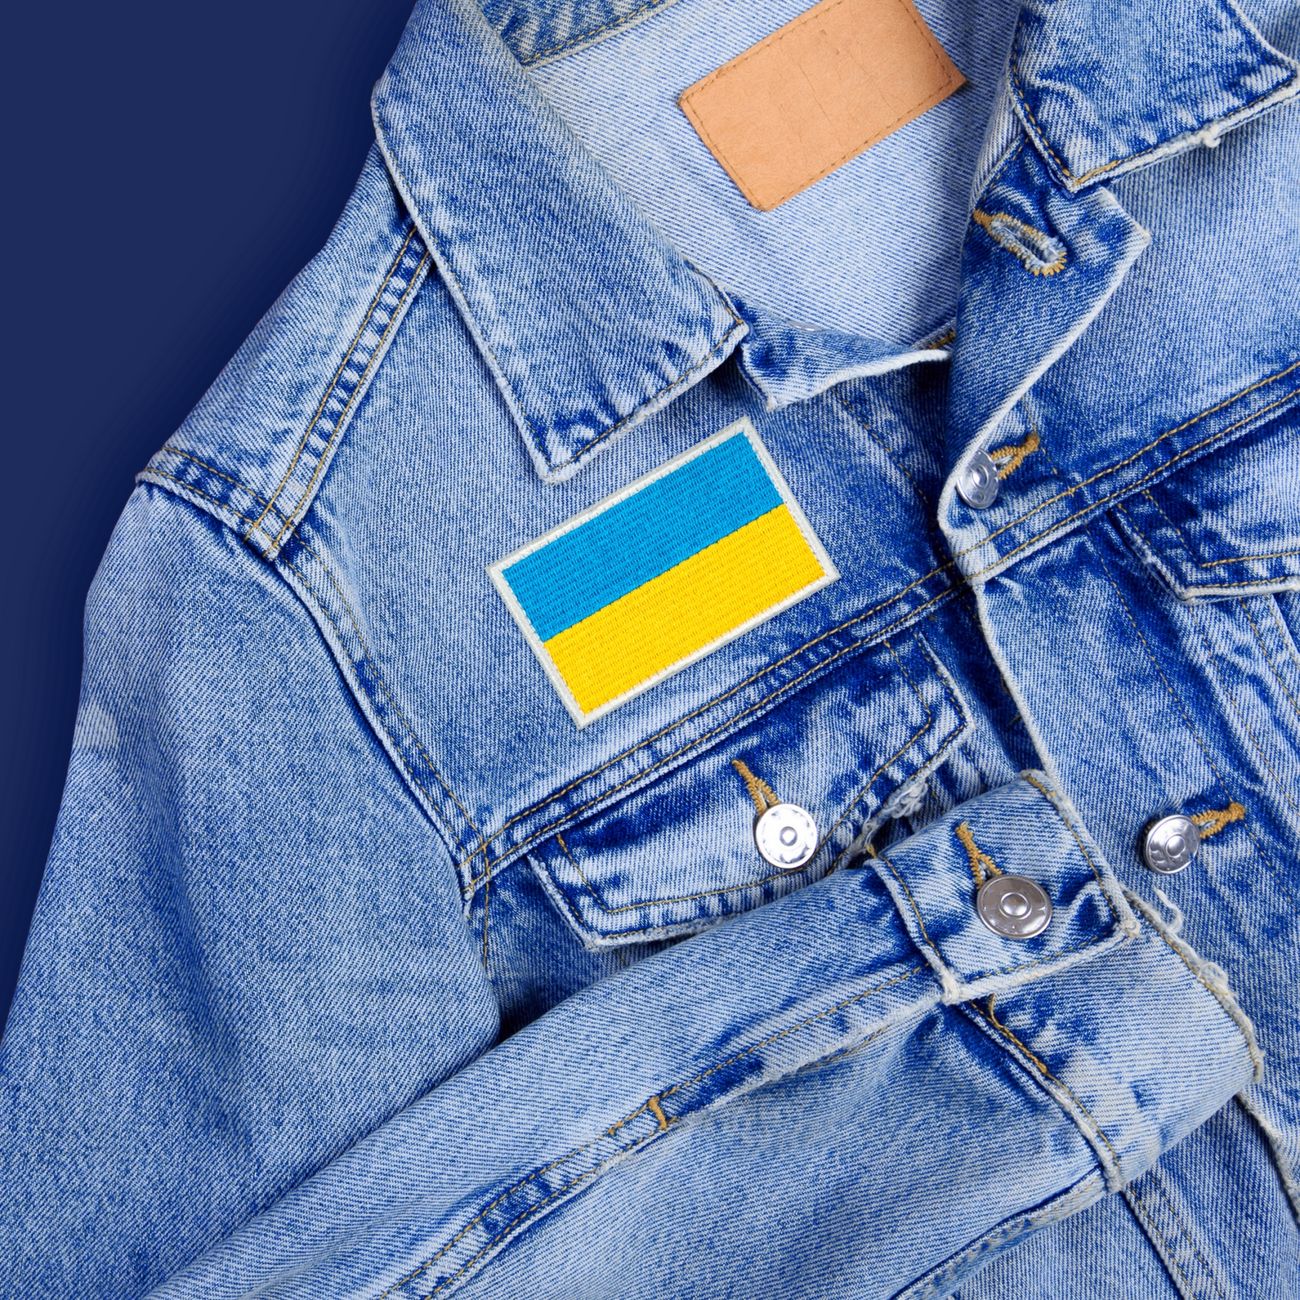 tygmarke-ukrainska-flaggan-92032-2